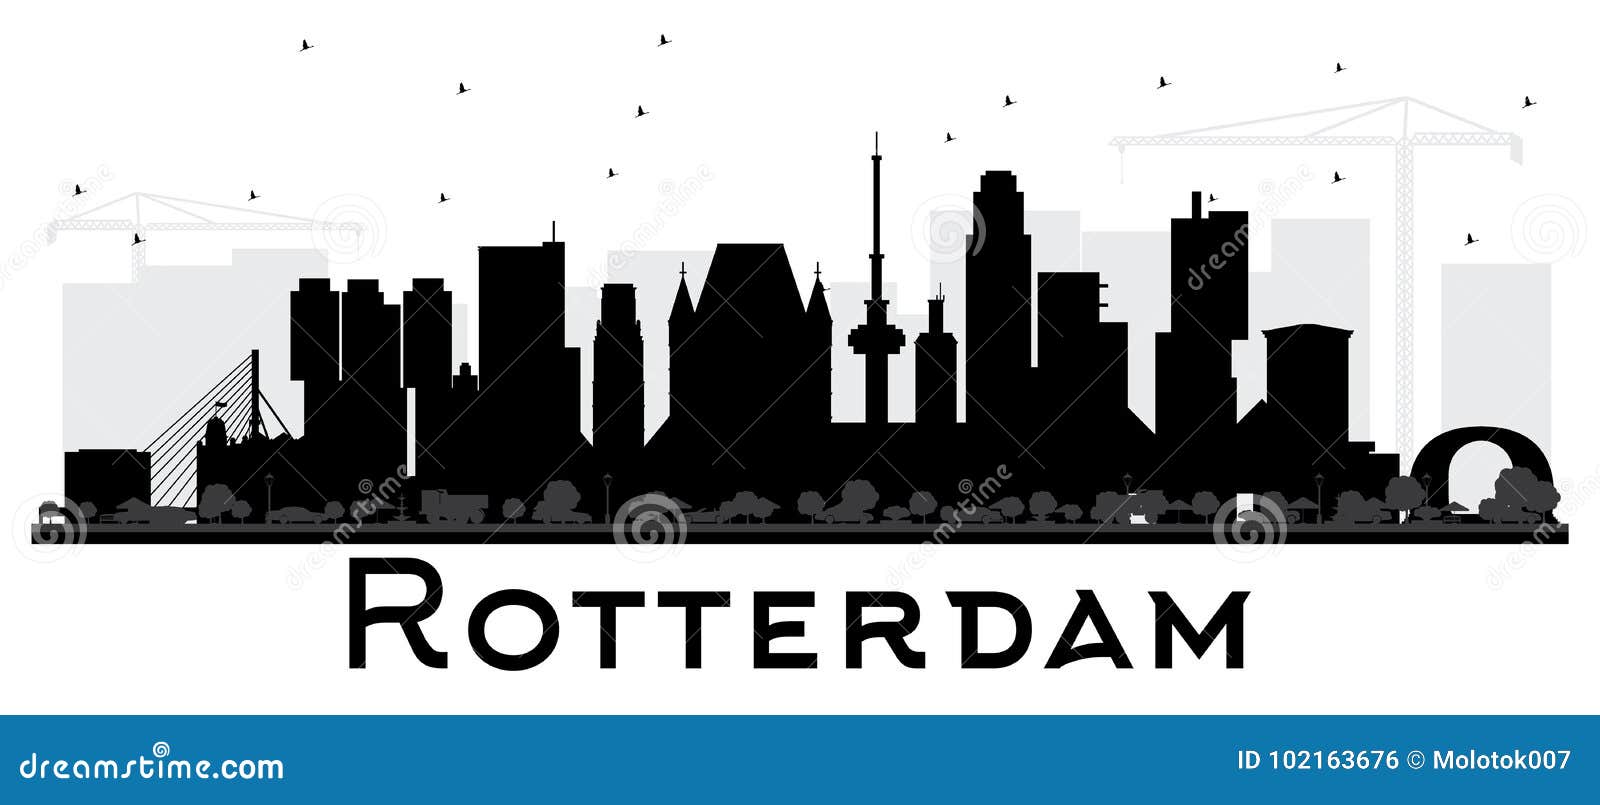 rotterdam netherlands skyline black and white silhouette.